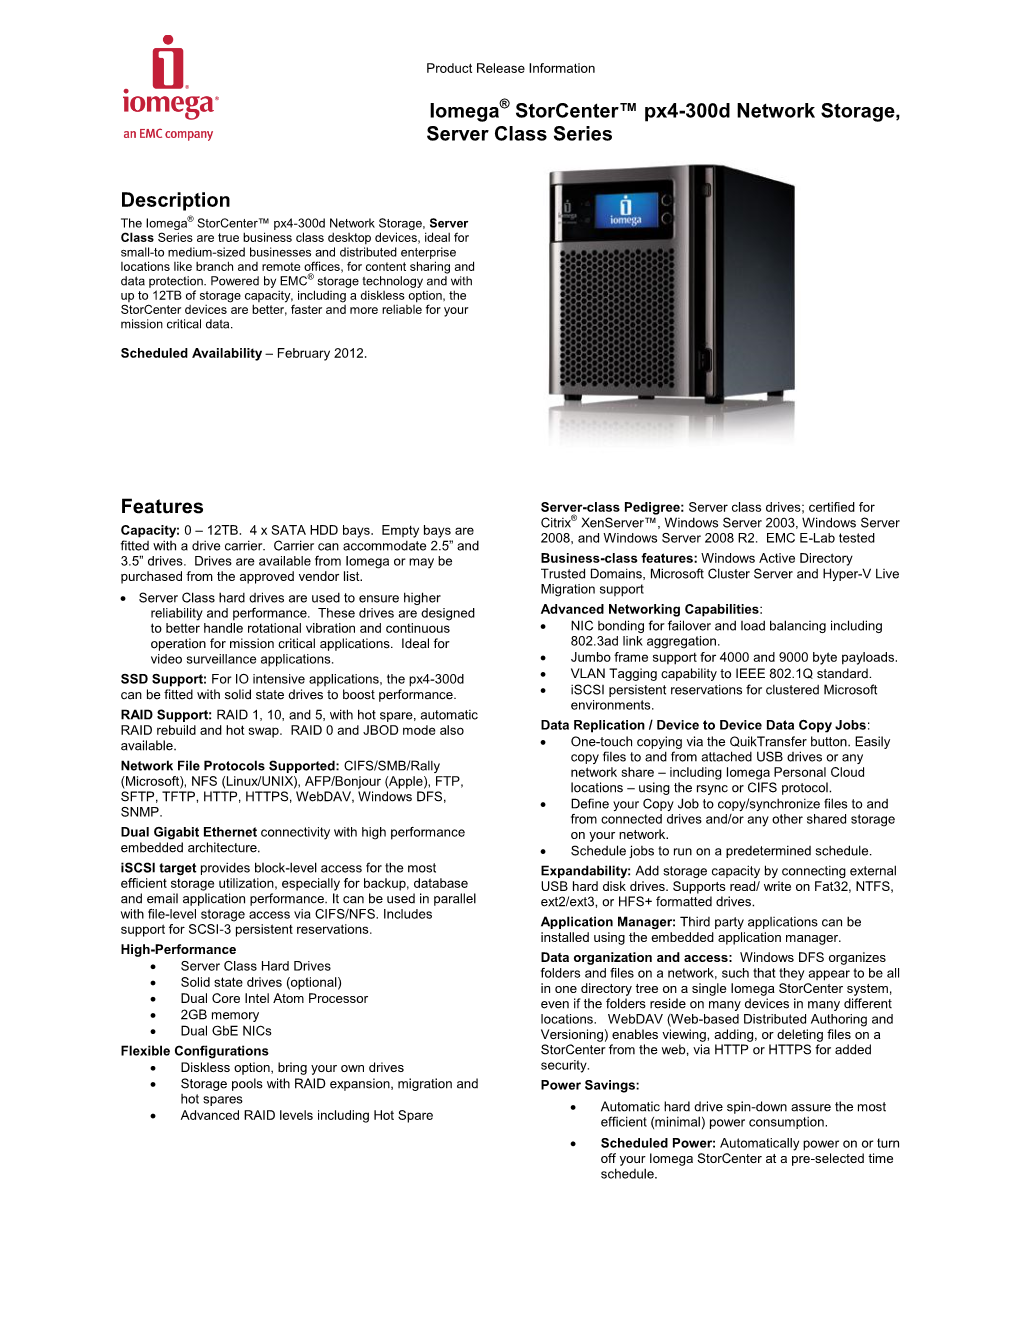 Iomega ® Storcenter™ Px4-300D Network Storage, Server Class